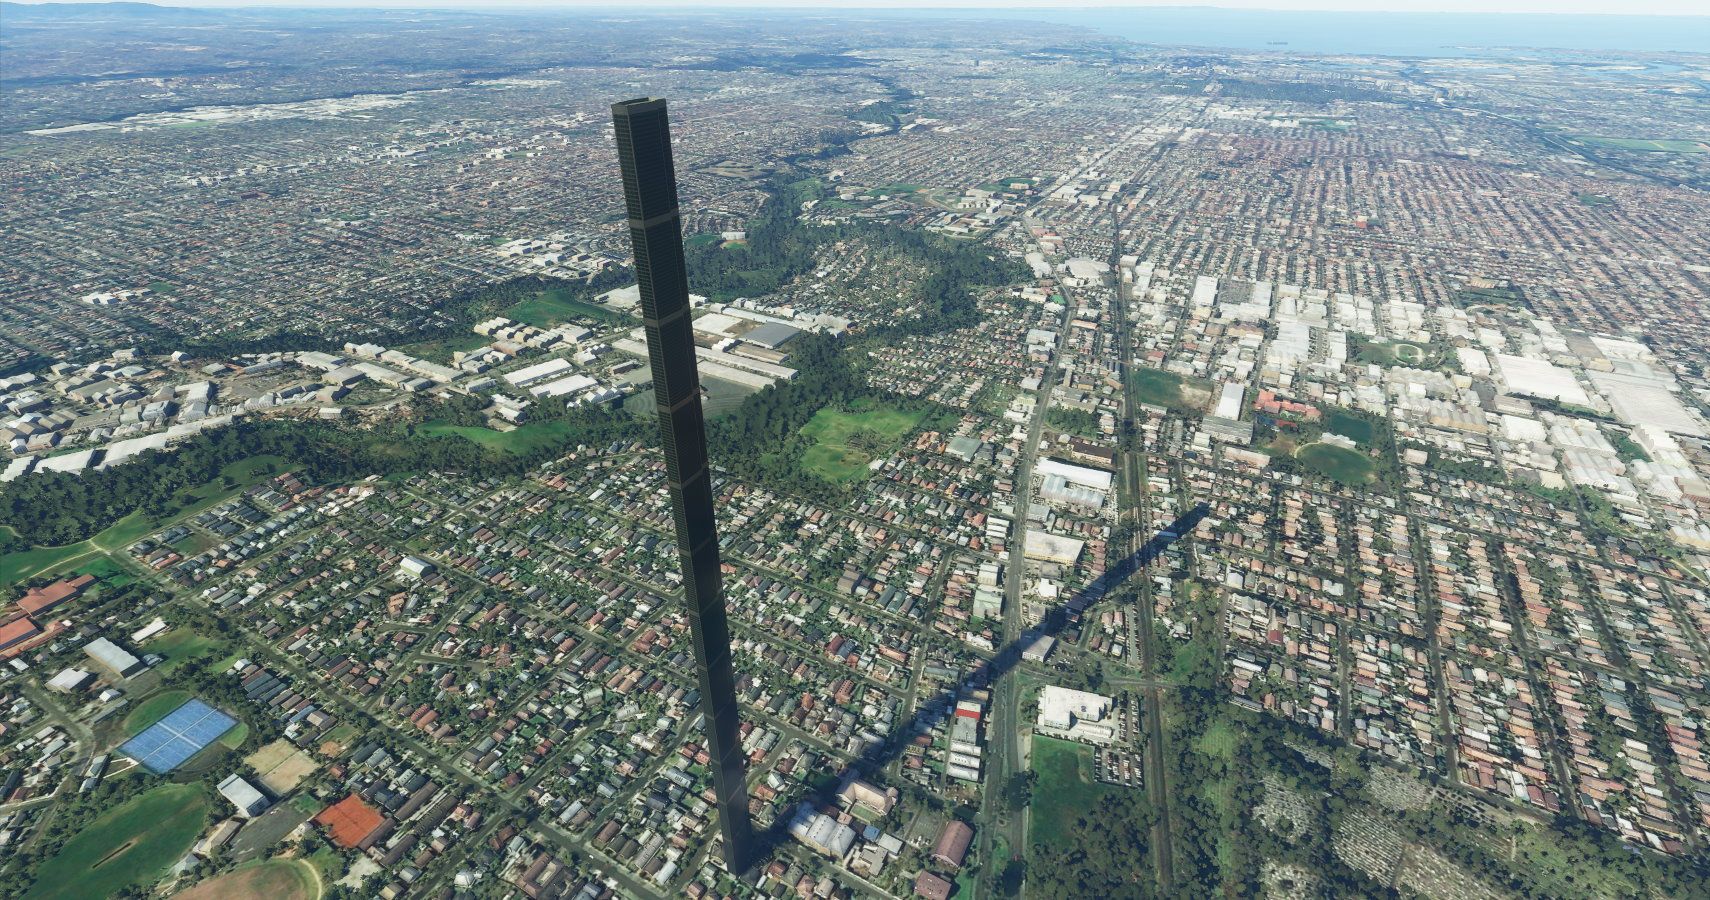 A typo created a 212-story monolith in 'Microsoft Flight Simulator